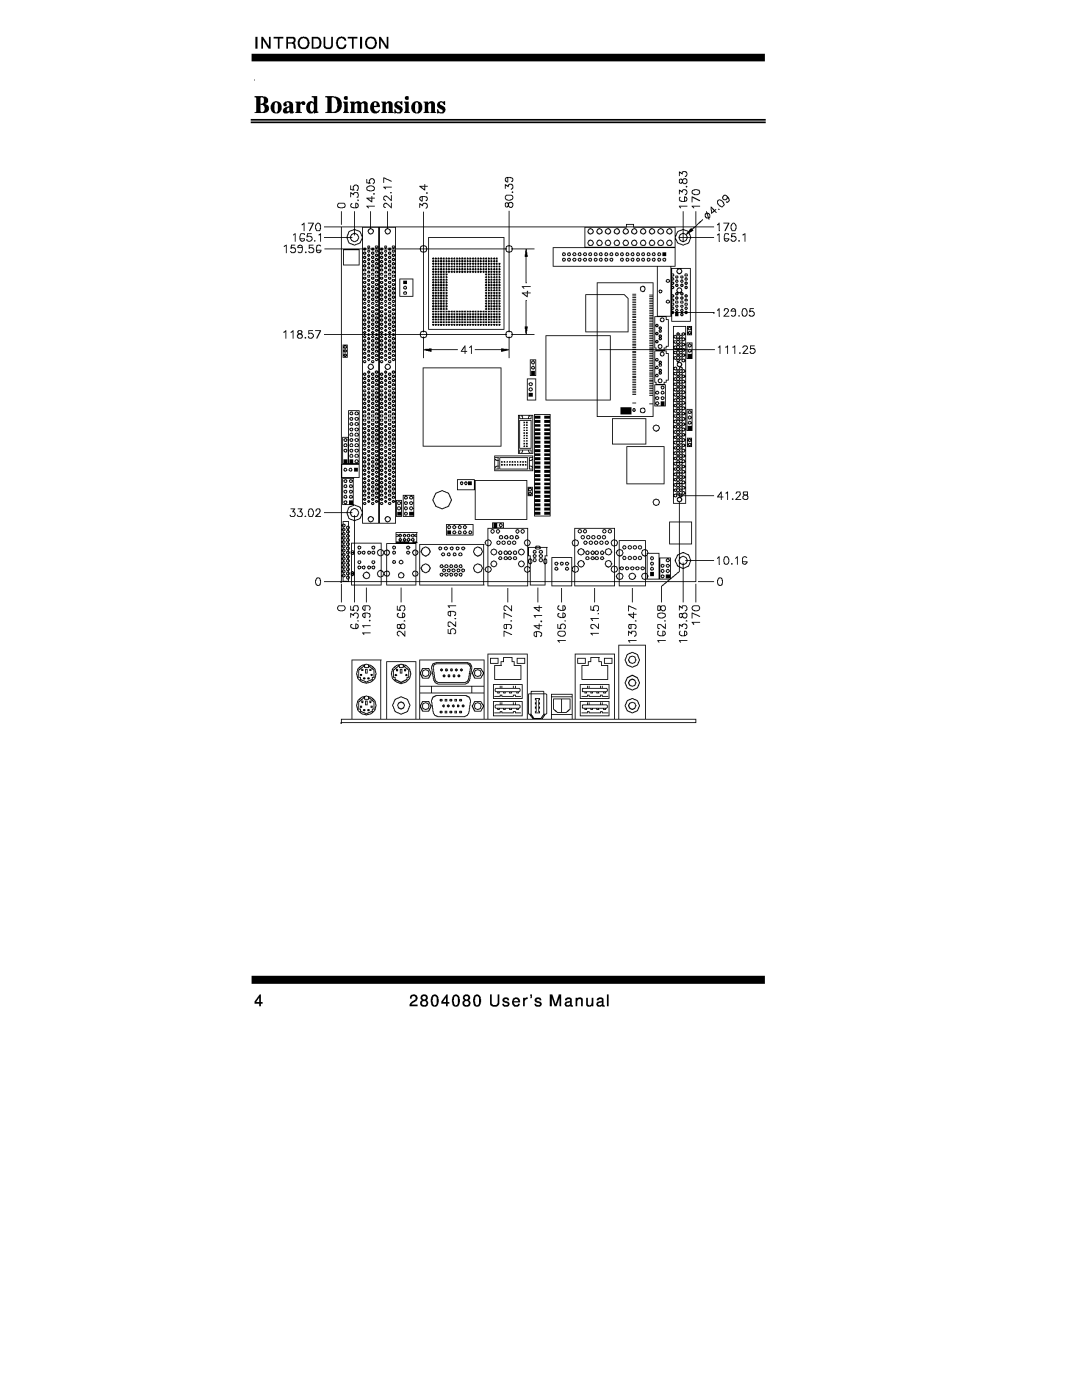 Intel Duo/Solo 945GM, 2804080 user manual Board Dimensions, Introduction 